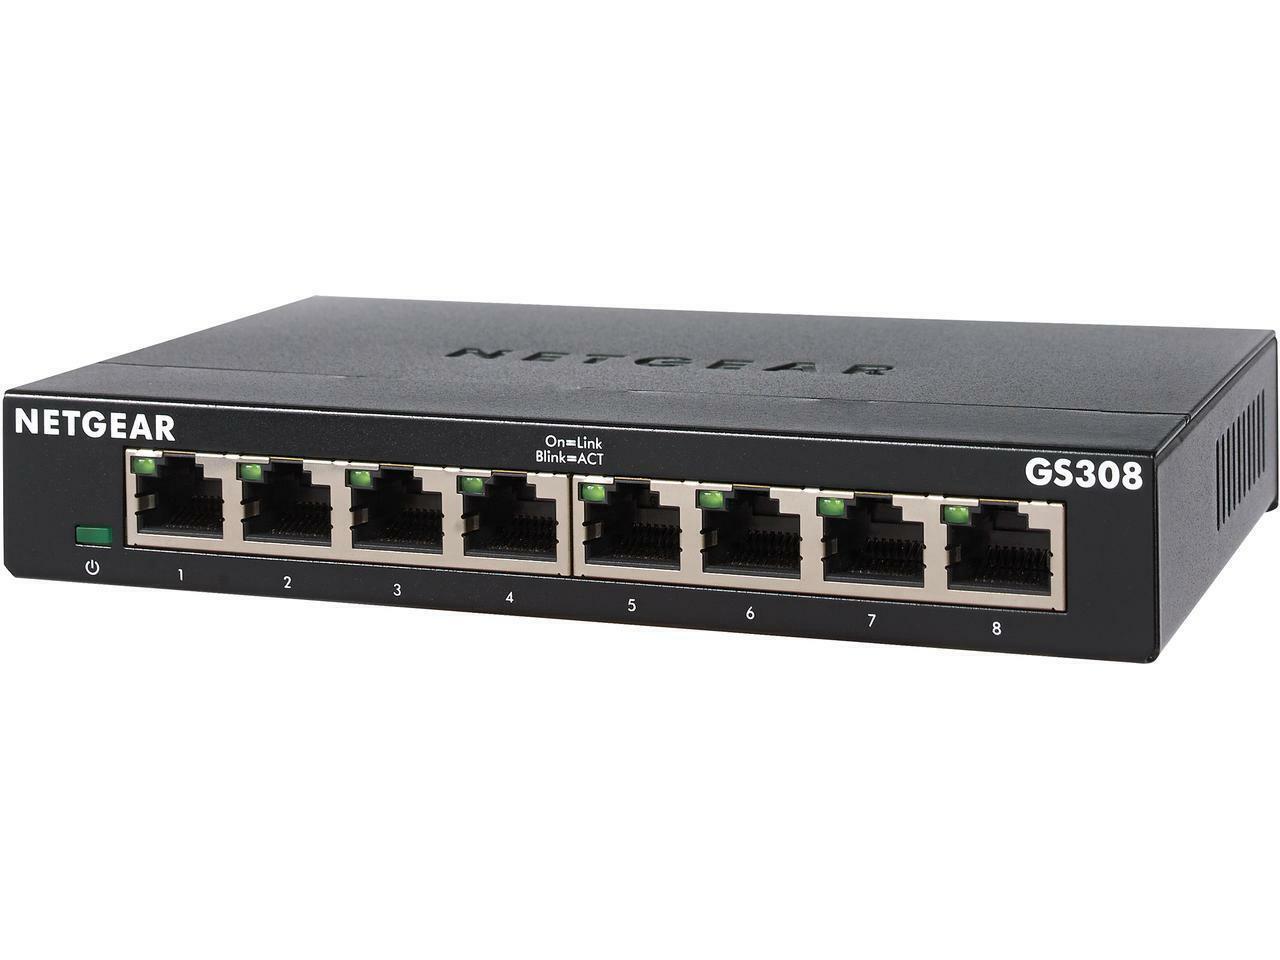 NETGEAR 8-Port Gigabit Ethernet Unmanaged Switch (GS308) Home/Office Network Hub